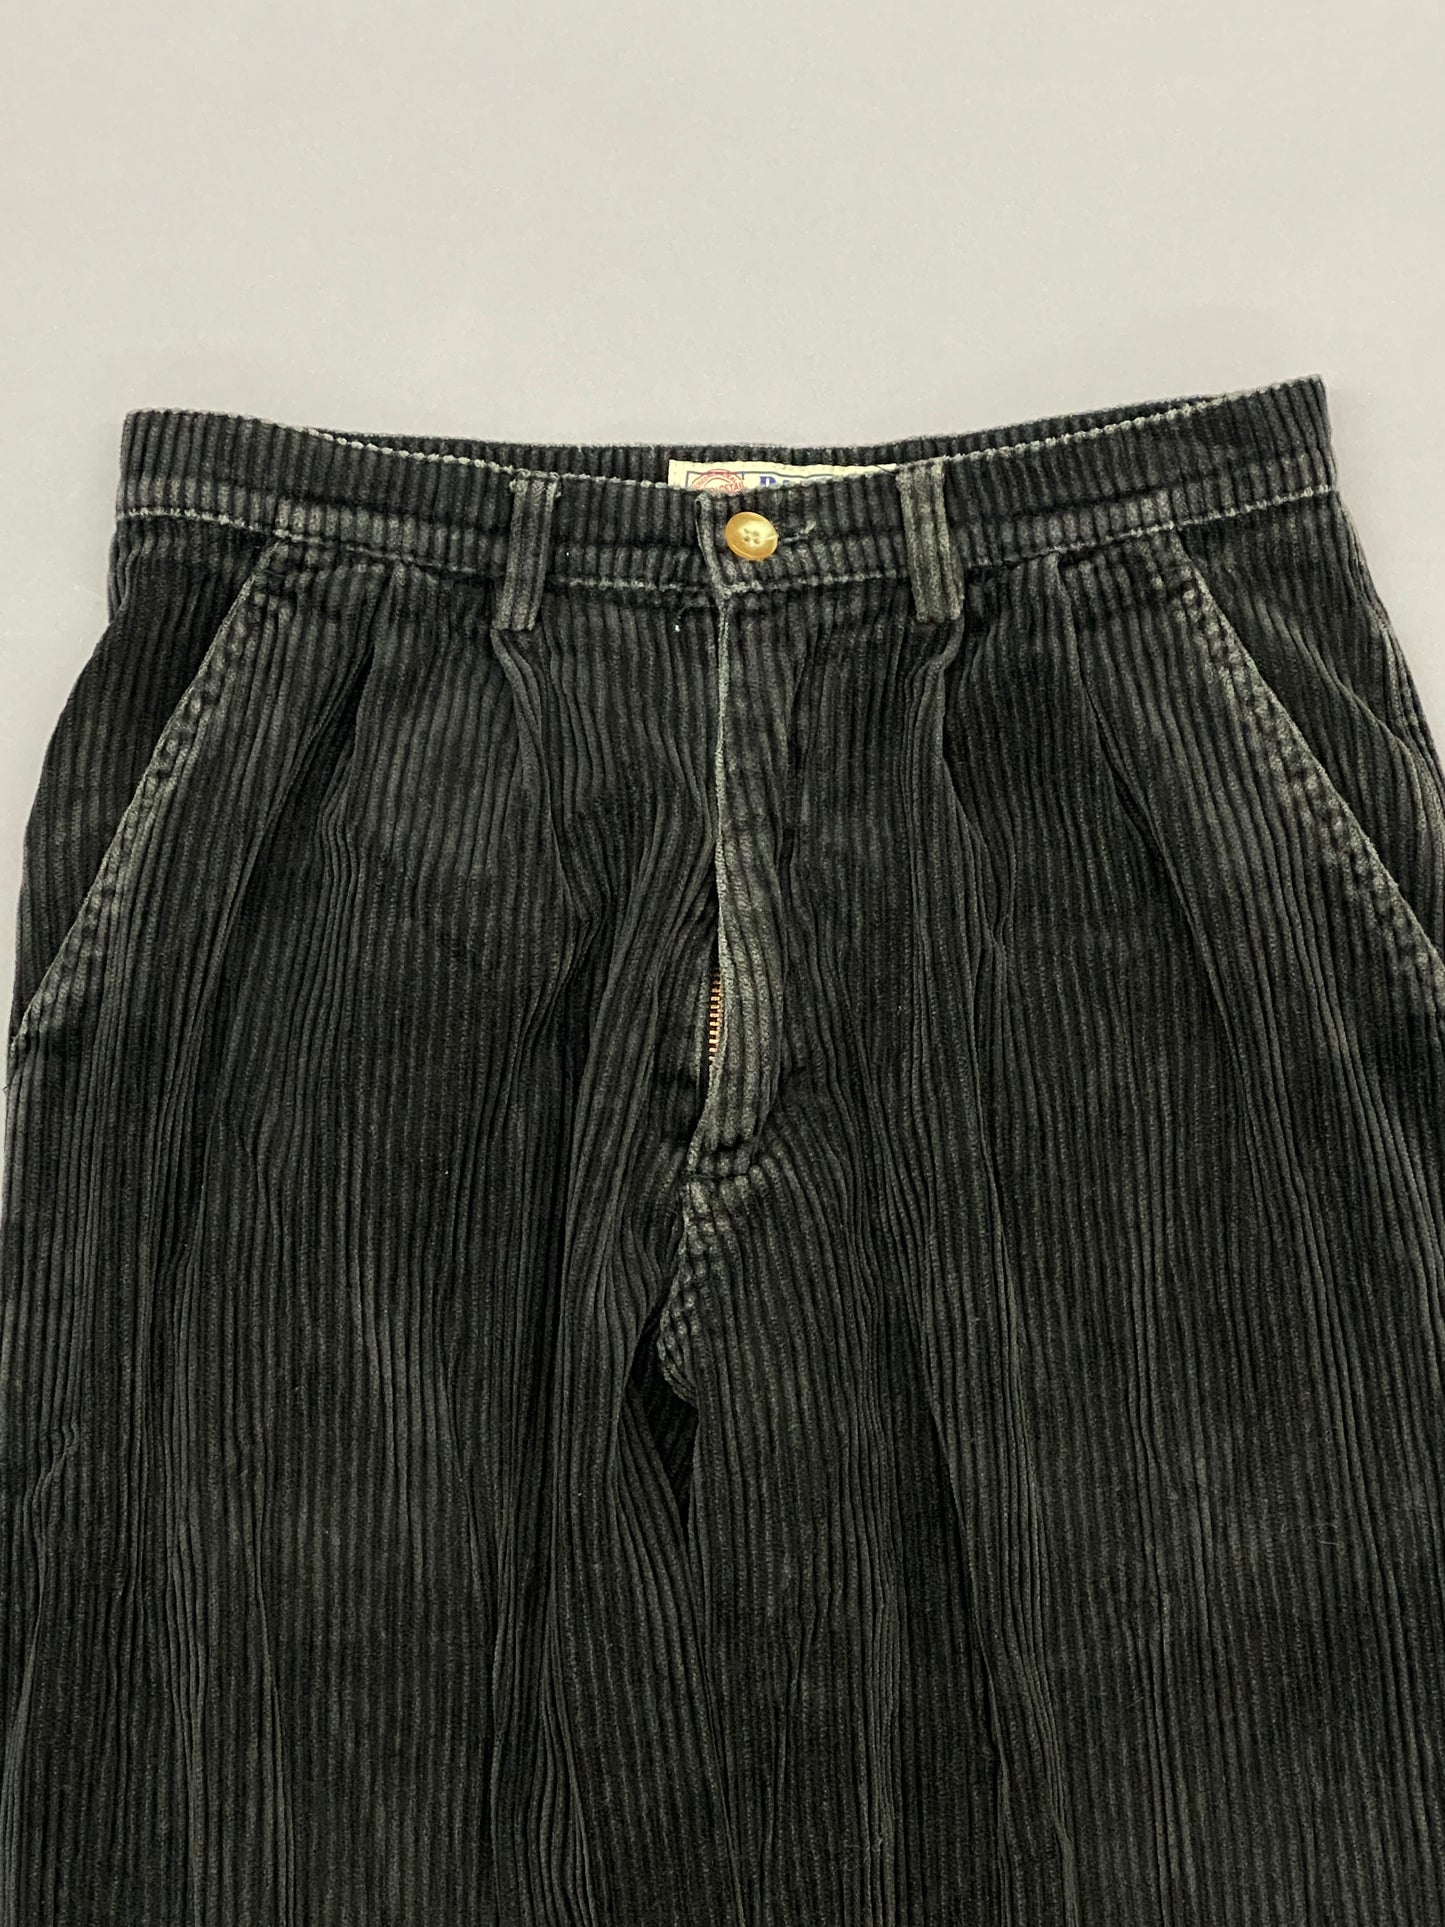 Black Panino Vintage Corduroy Pants - 28